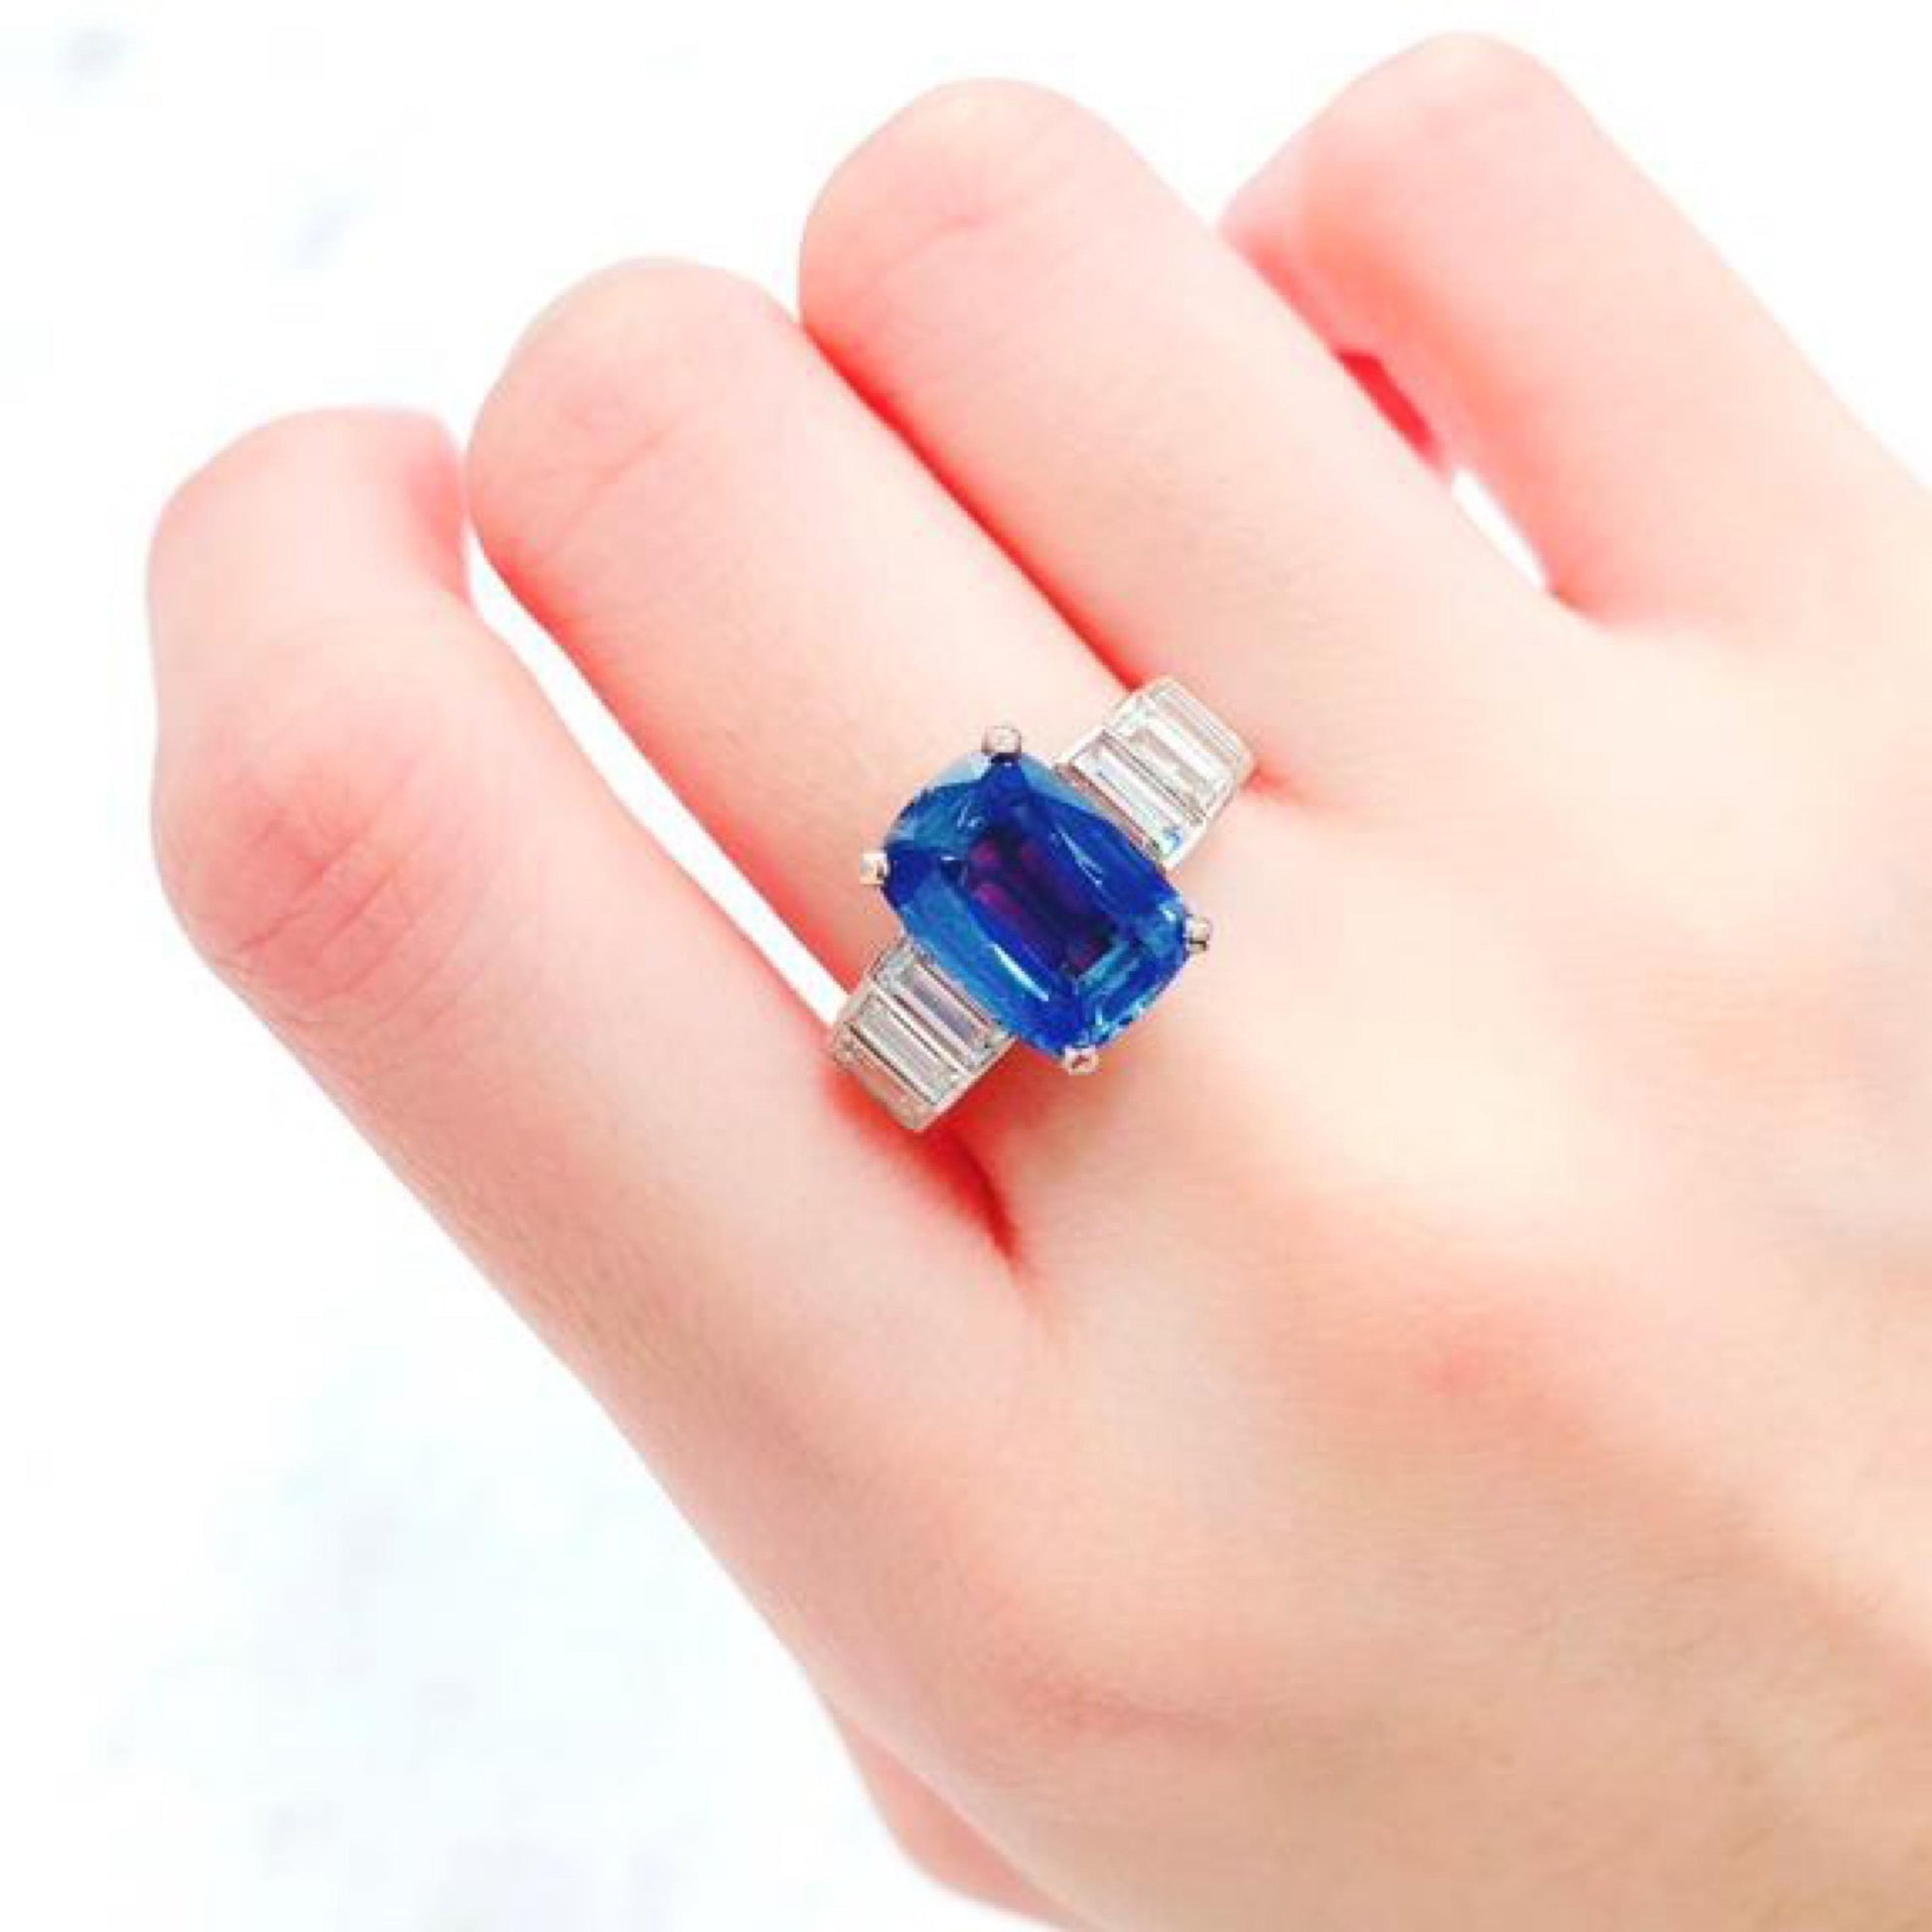 Emilio Jewelry Certified Kashmir Sapphire Ring